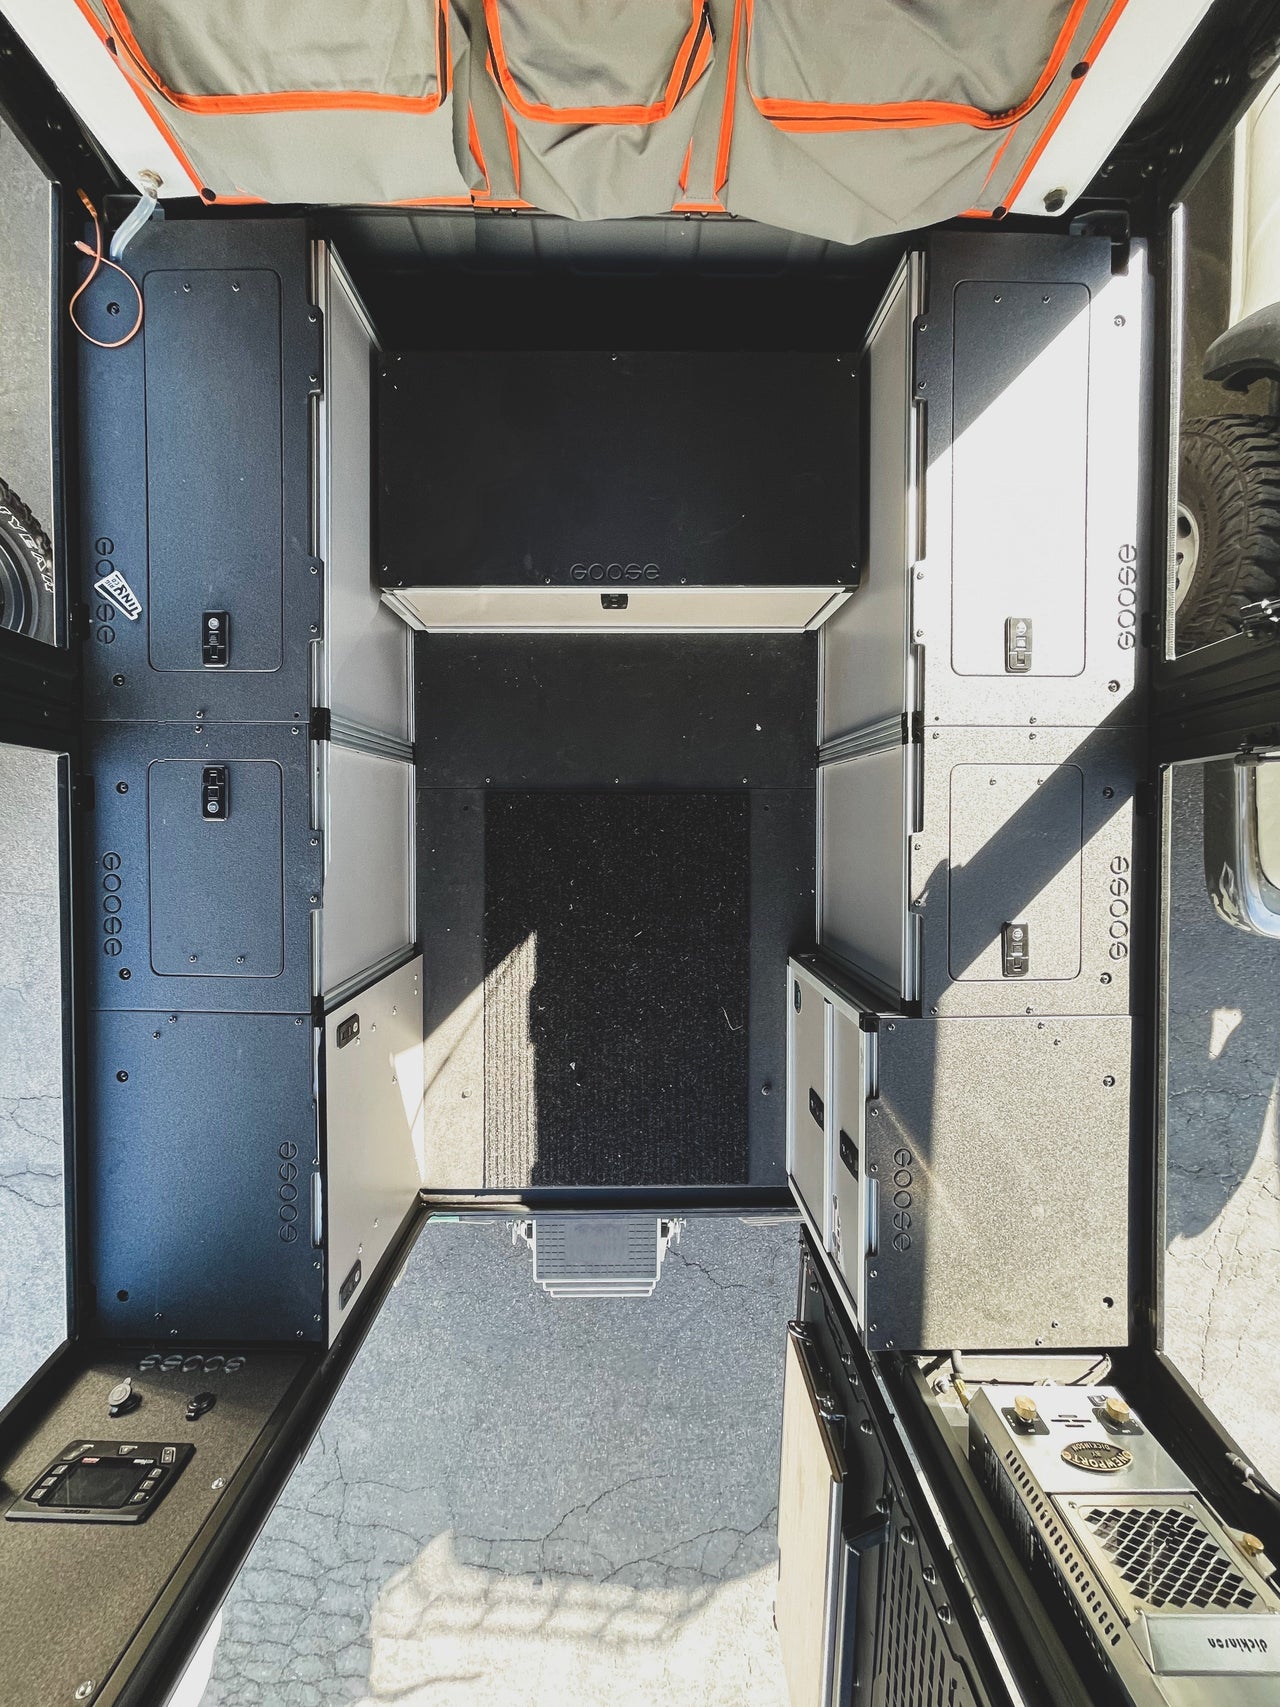 GOOSE GEAR Alu-Cab Alu-Cabin Ram 2500 & 3500 2019-Present 5th Gen. - Bed Plate System - 6'4" Bed